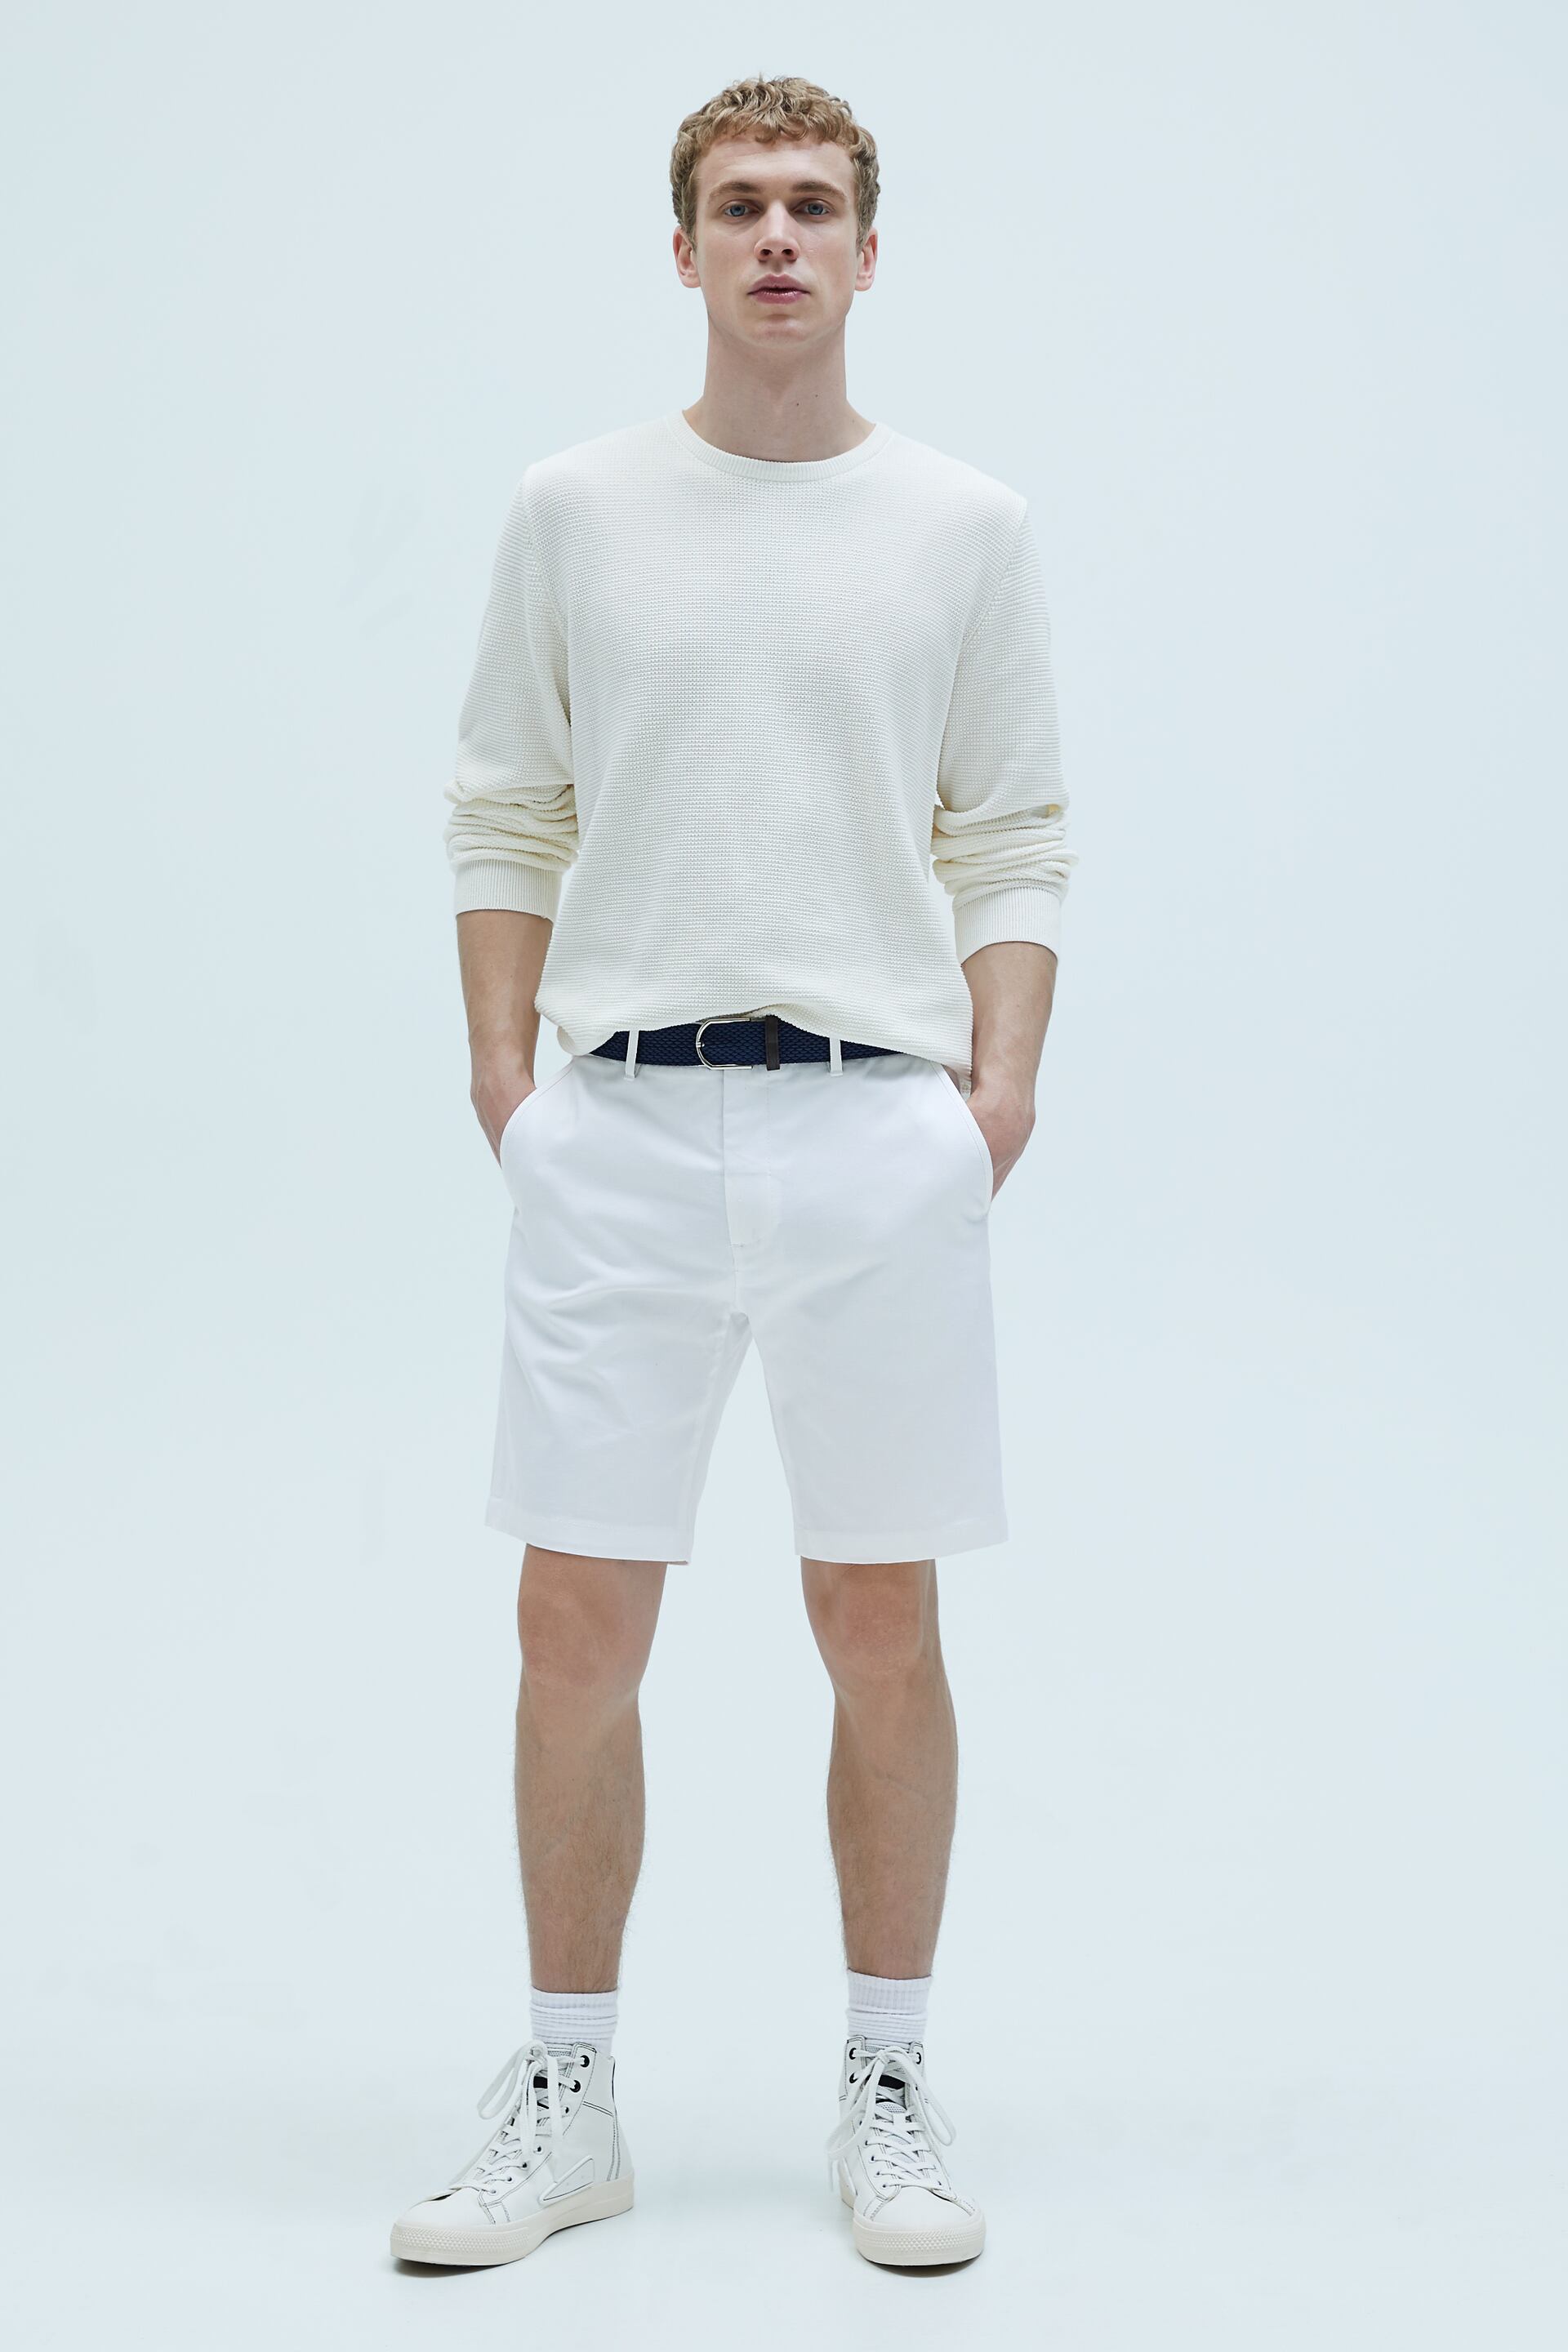 The Best Men's Shorts to Wear for Summer - VanityForbes